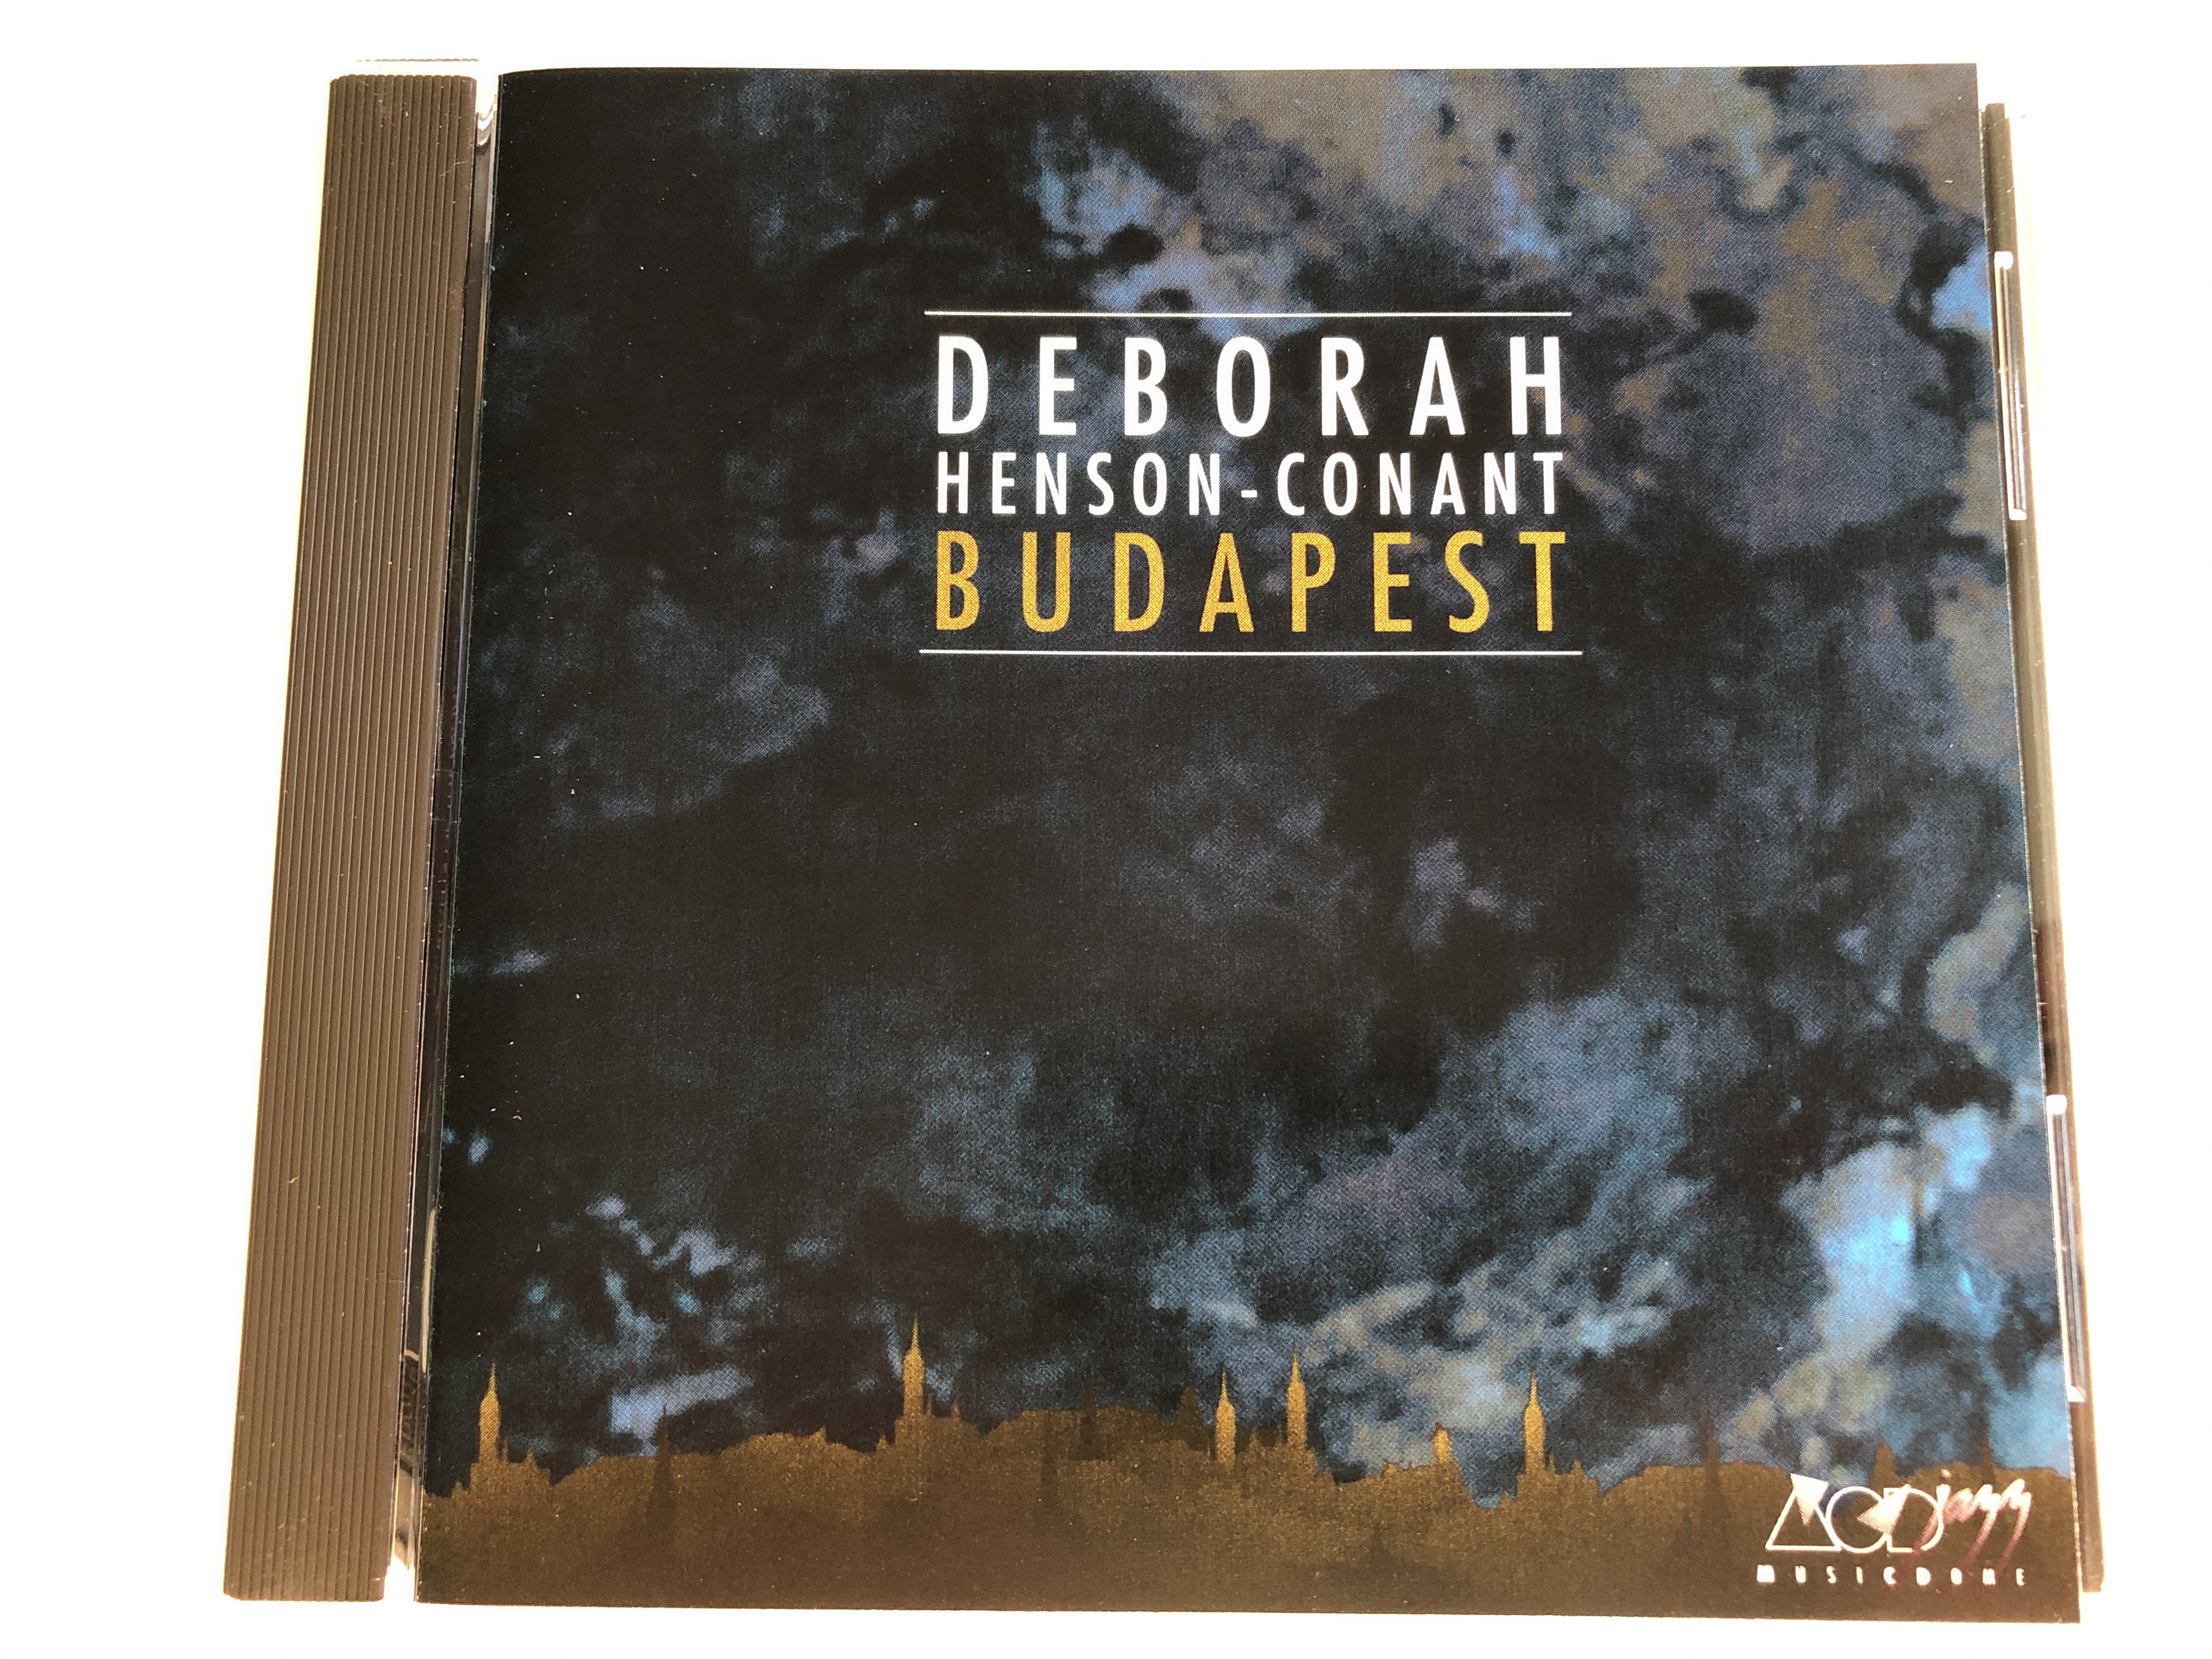 deborah-henson-conant-budapest-musicdome-audio-cd-1992-mcd-9211-2-1-.jpg